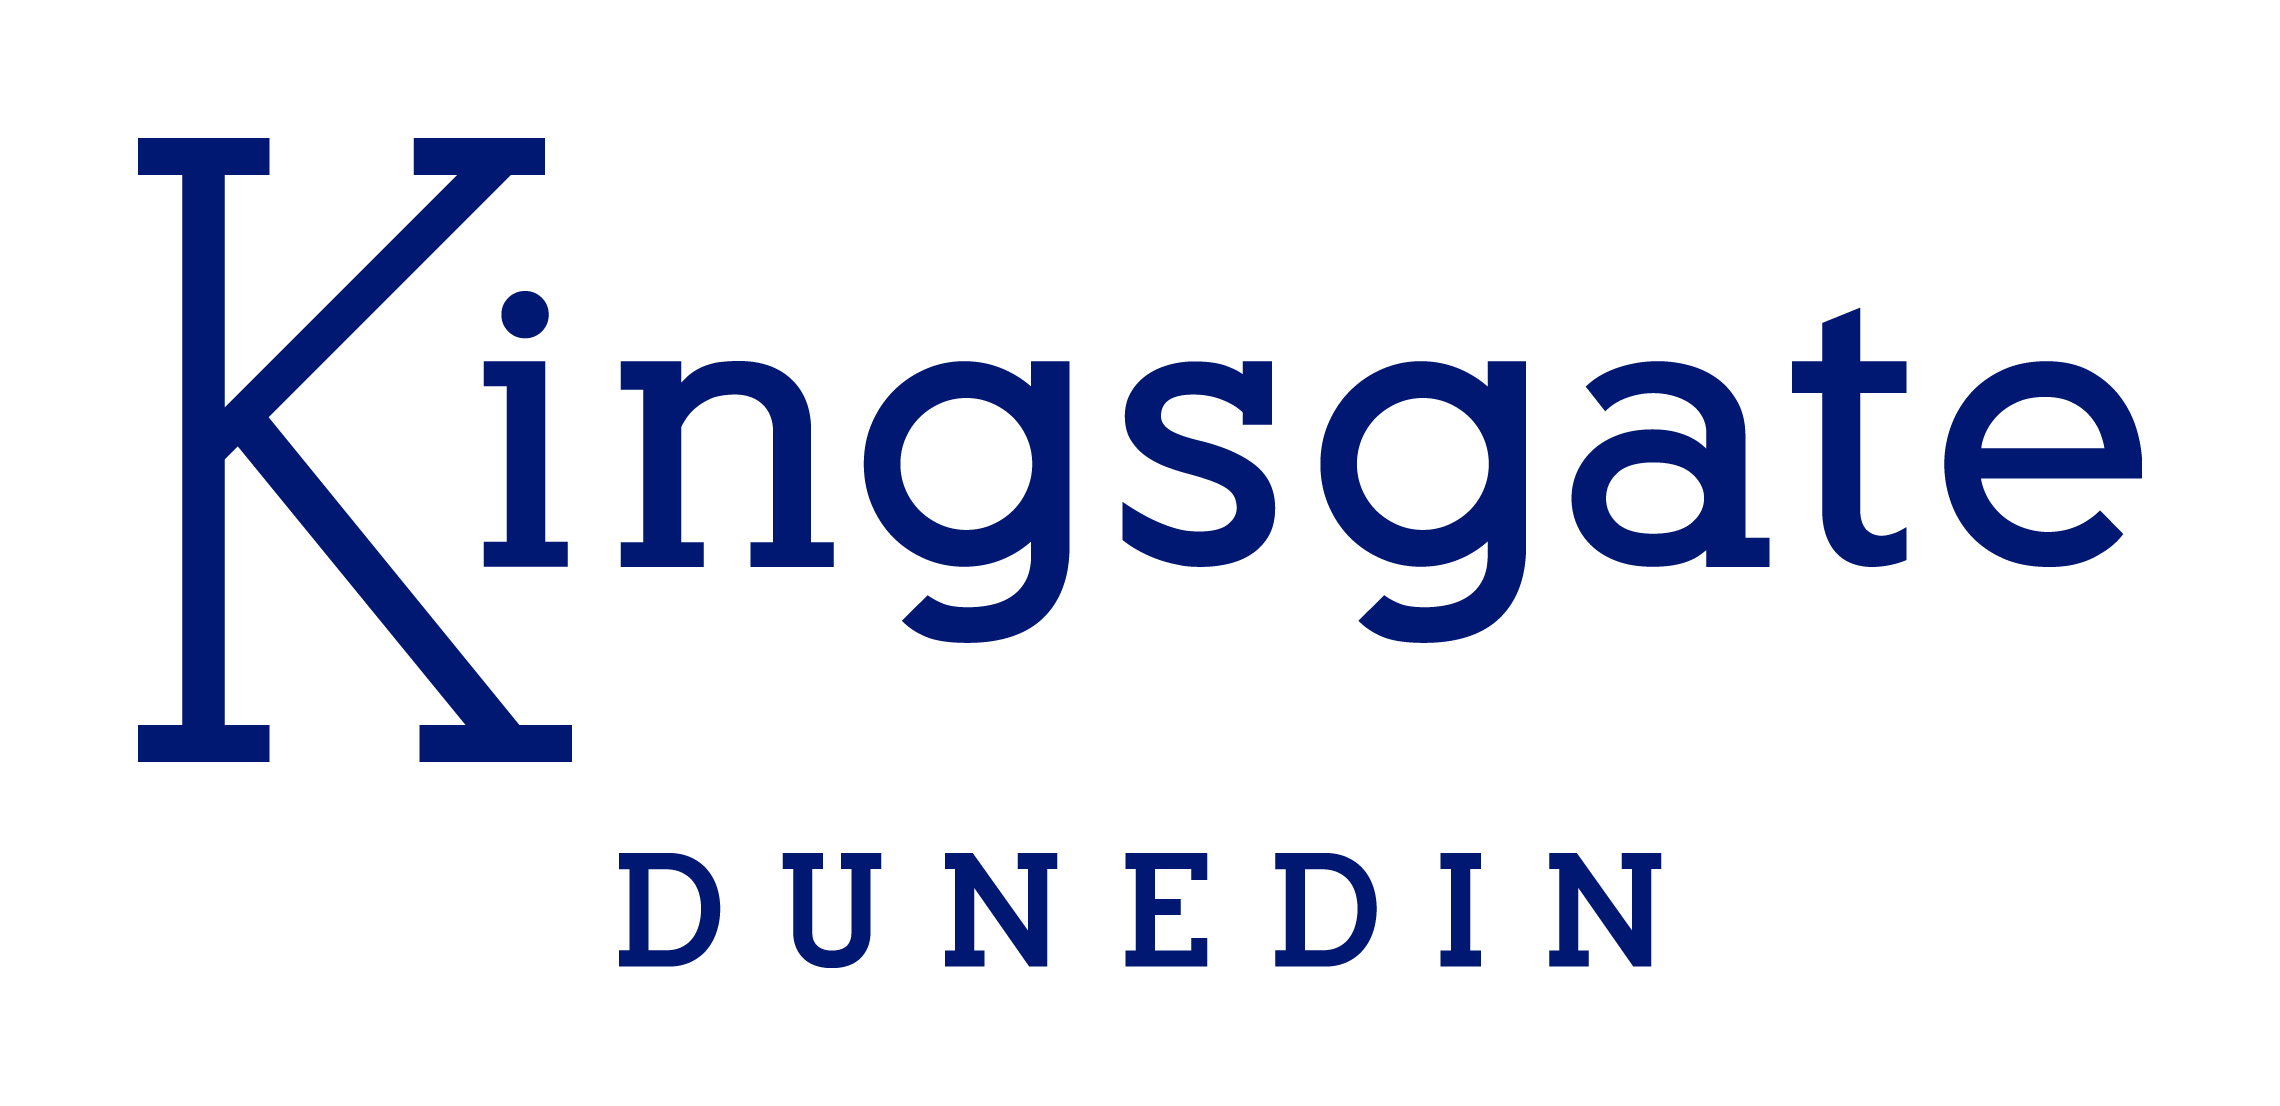 
Kingsgate Hotel Dunedin